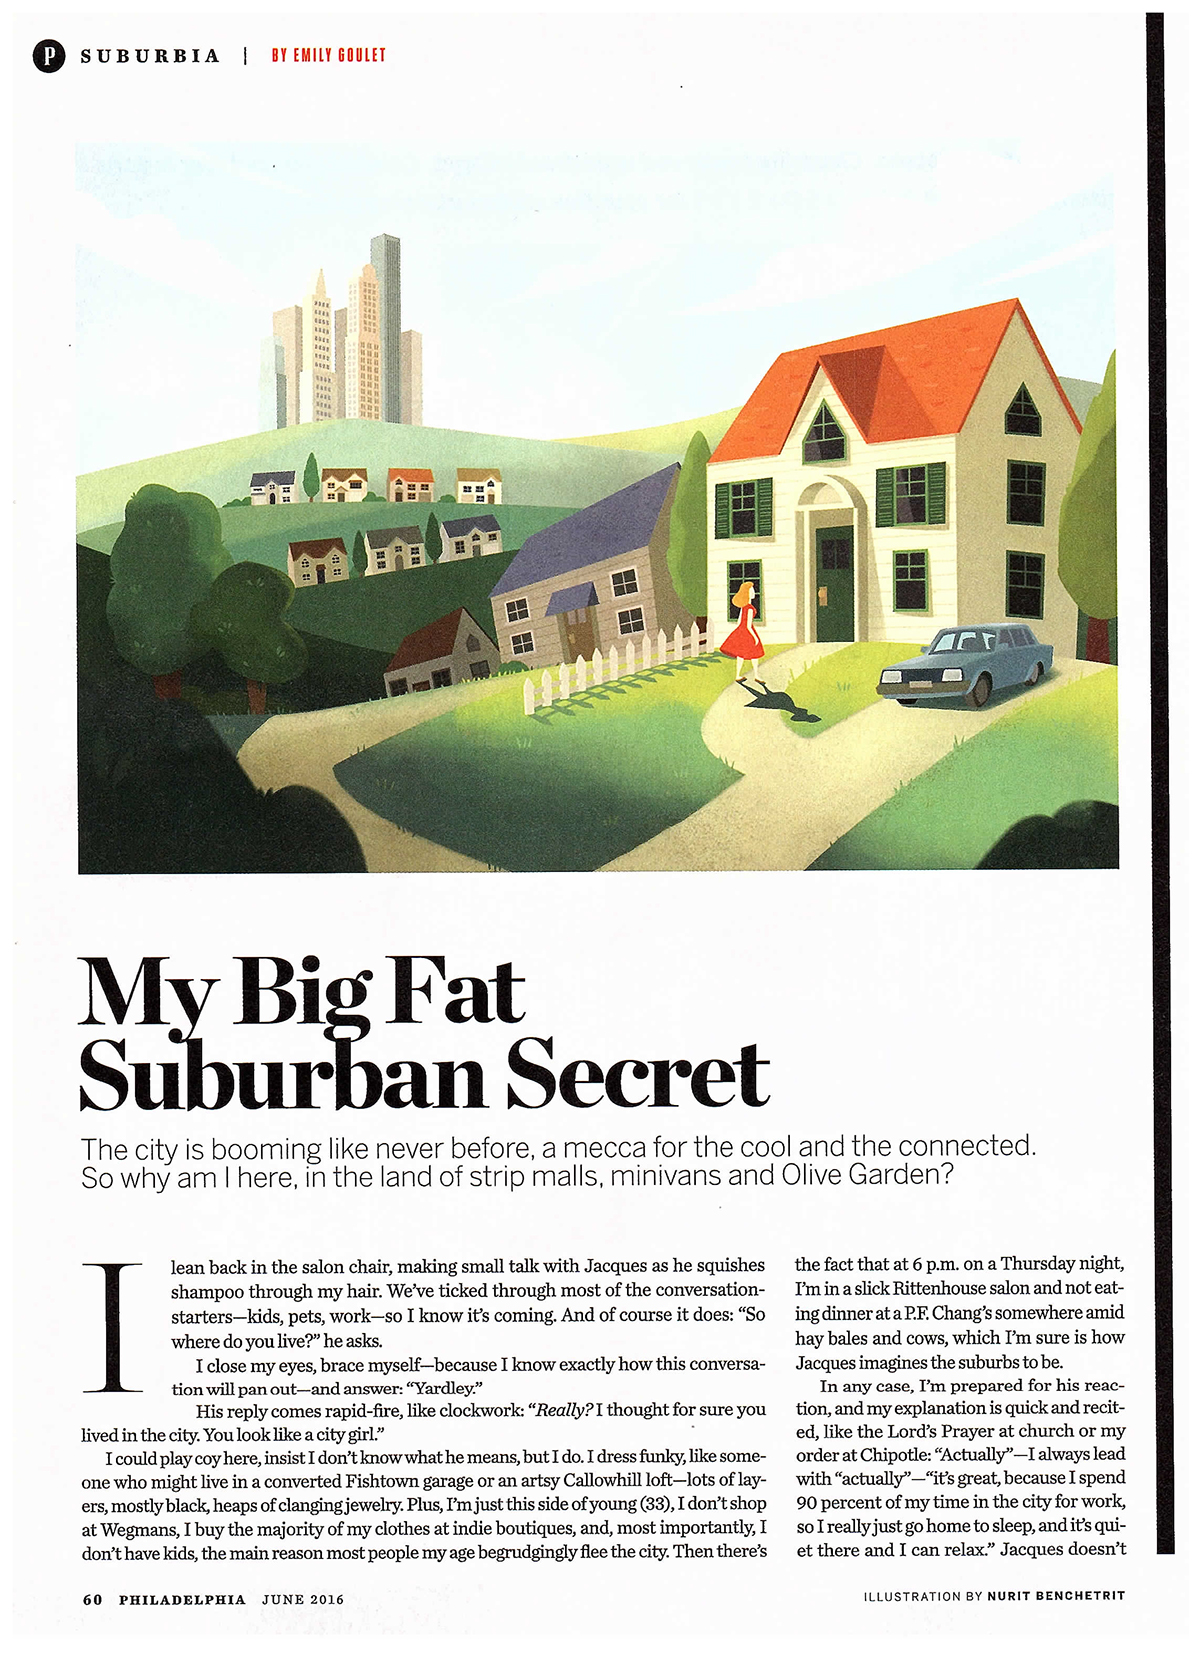 philadelphia magazine suburbs city Suburban